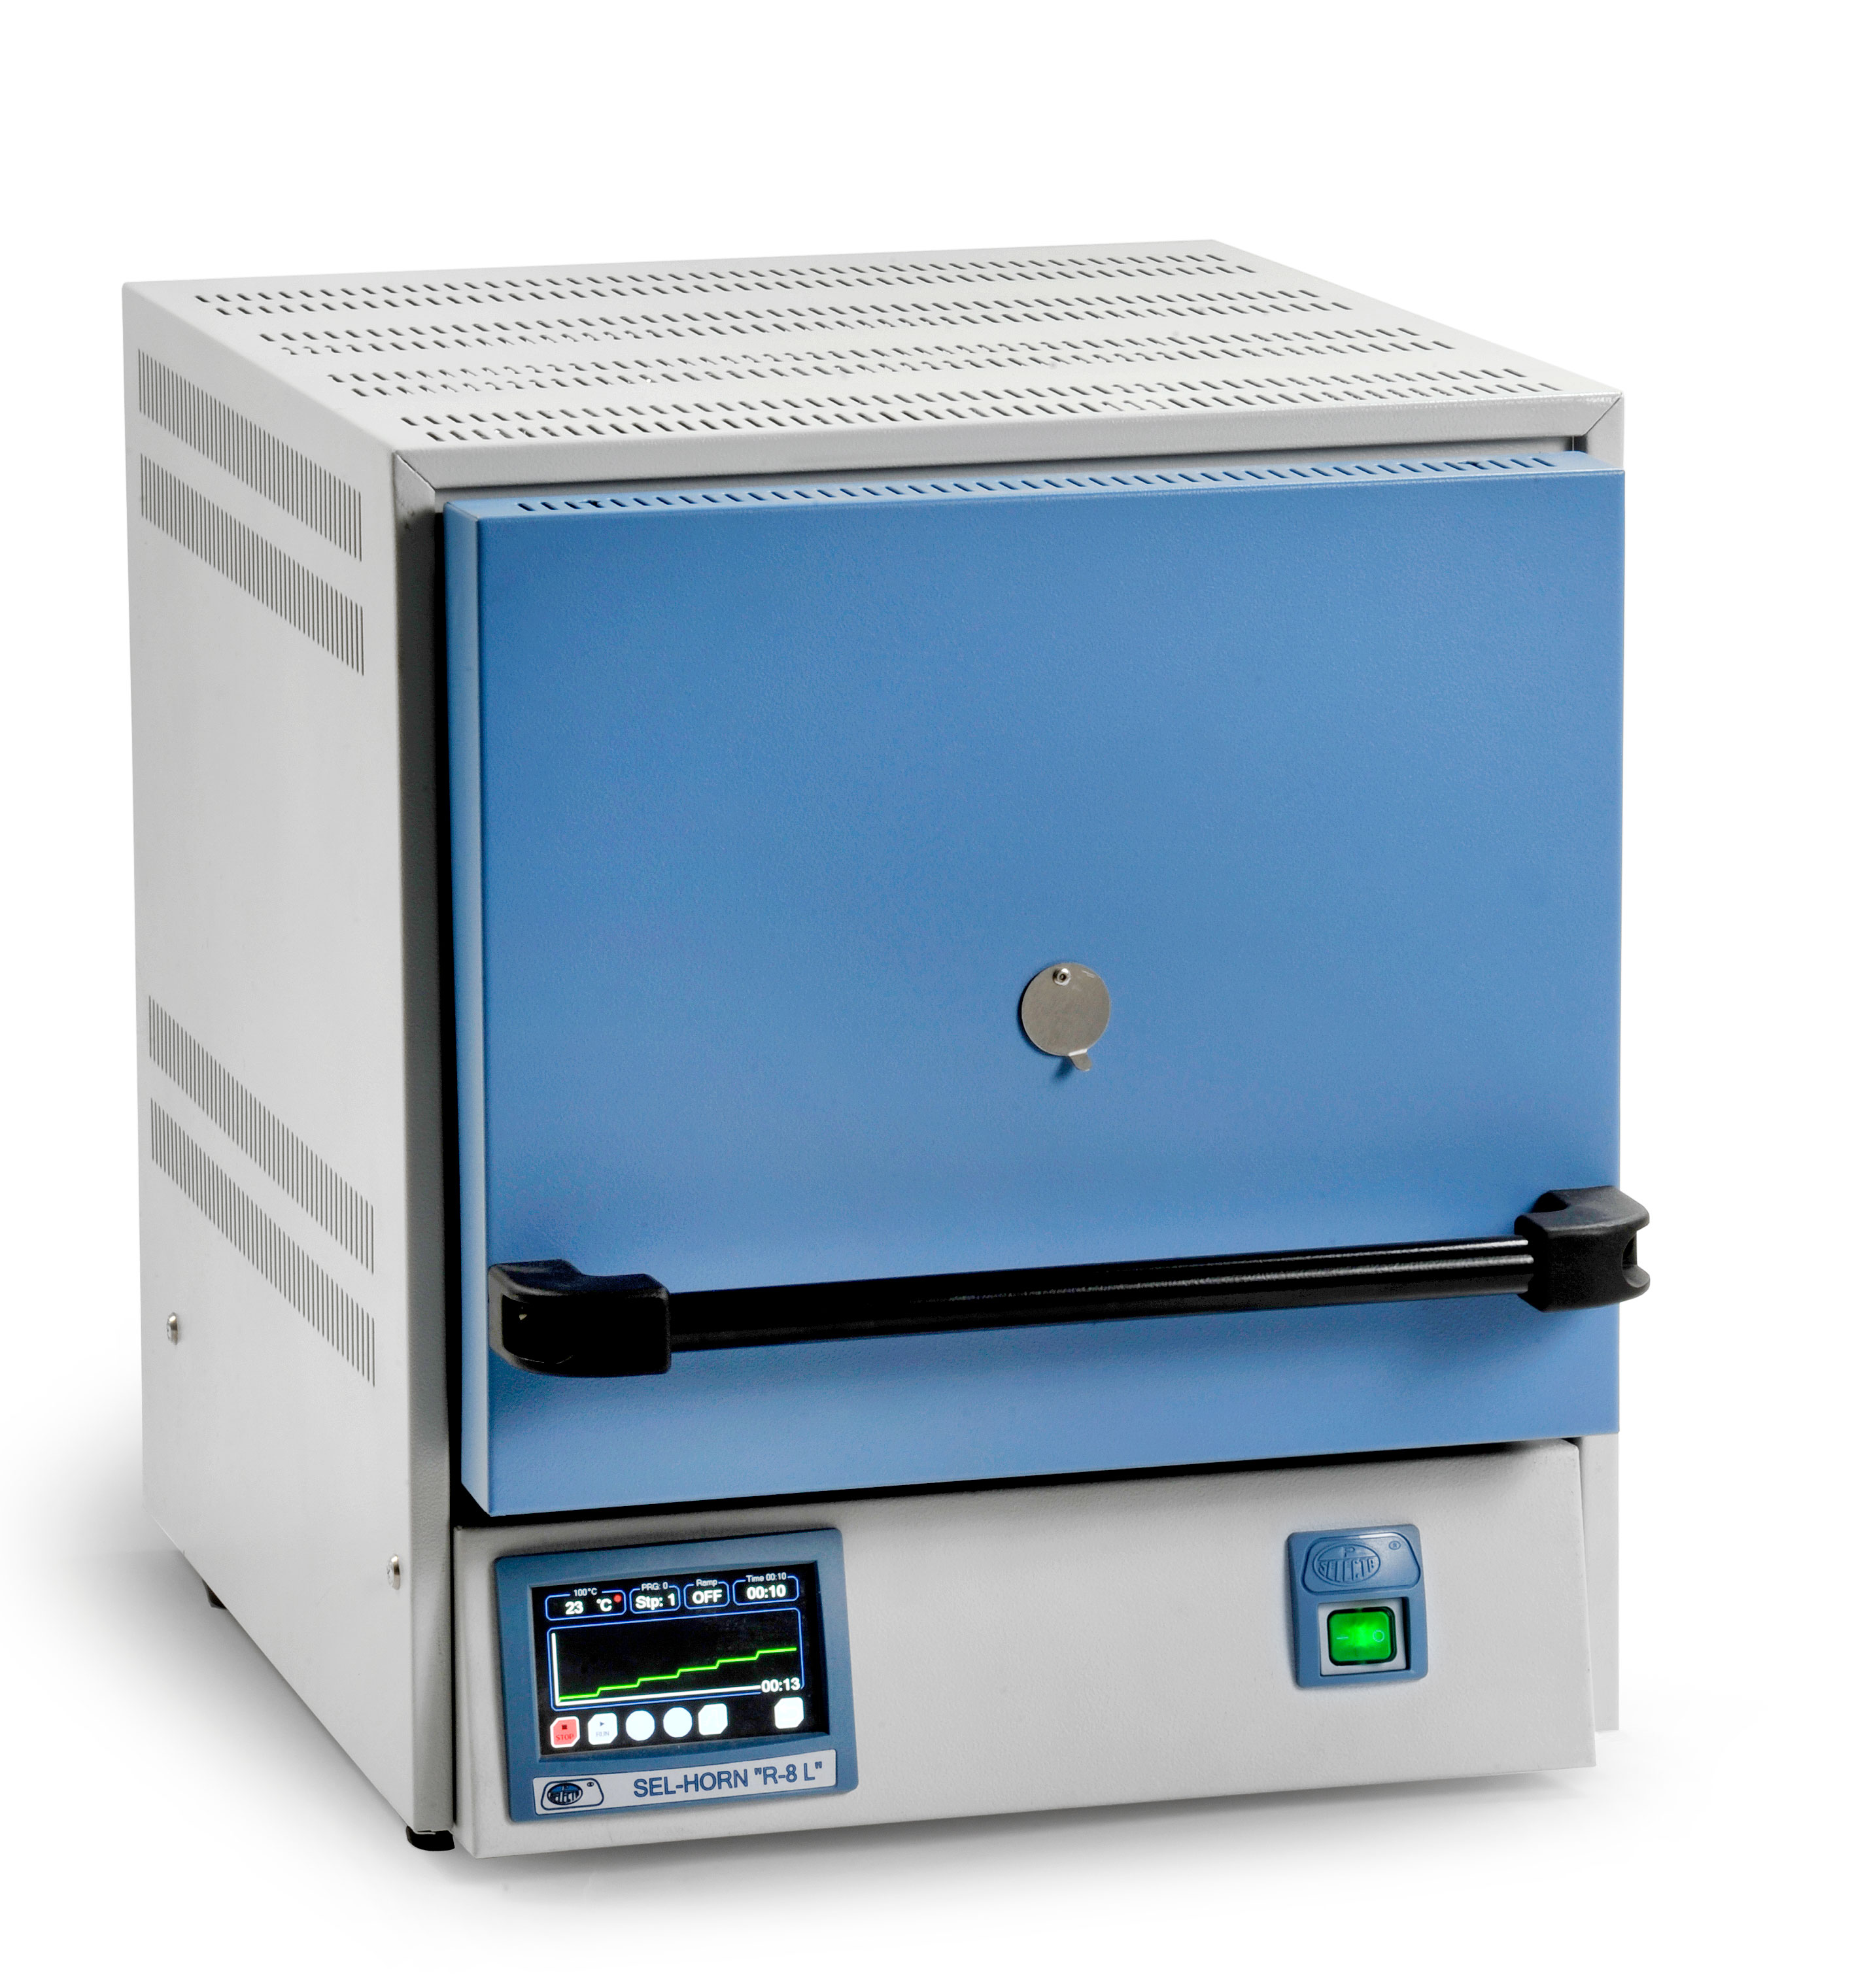 Electric muffle furnace R-3 L and R-8 L. J.P. SELECTA®. Model: R-3L. Max. T (ºC): 1100. Capacity (litres): 3. Ex. dim. HxWxD (mm): 430x340x470. Power (W): 1700. Weight (Kg): 18